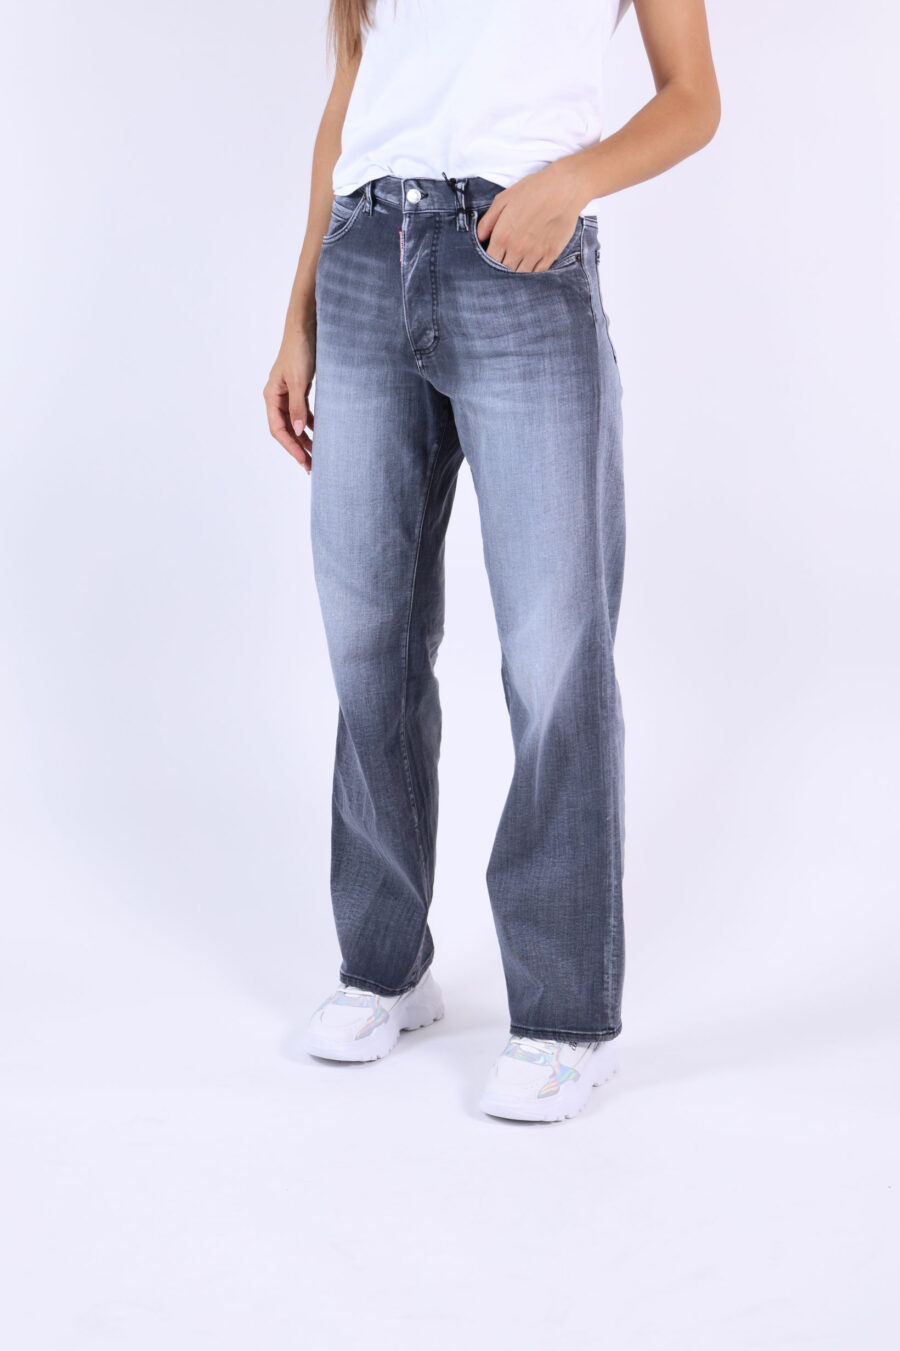 Jeans "San Diego jean" black worn - 361223054662201938 1